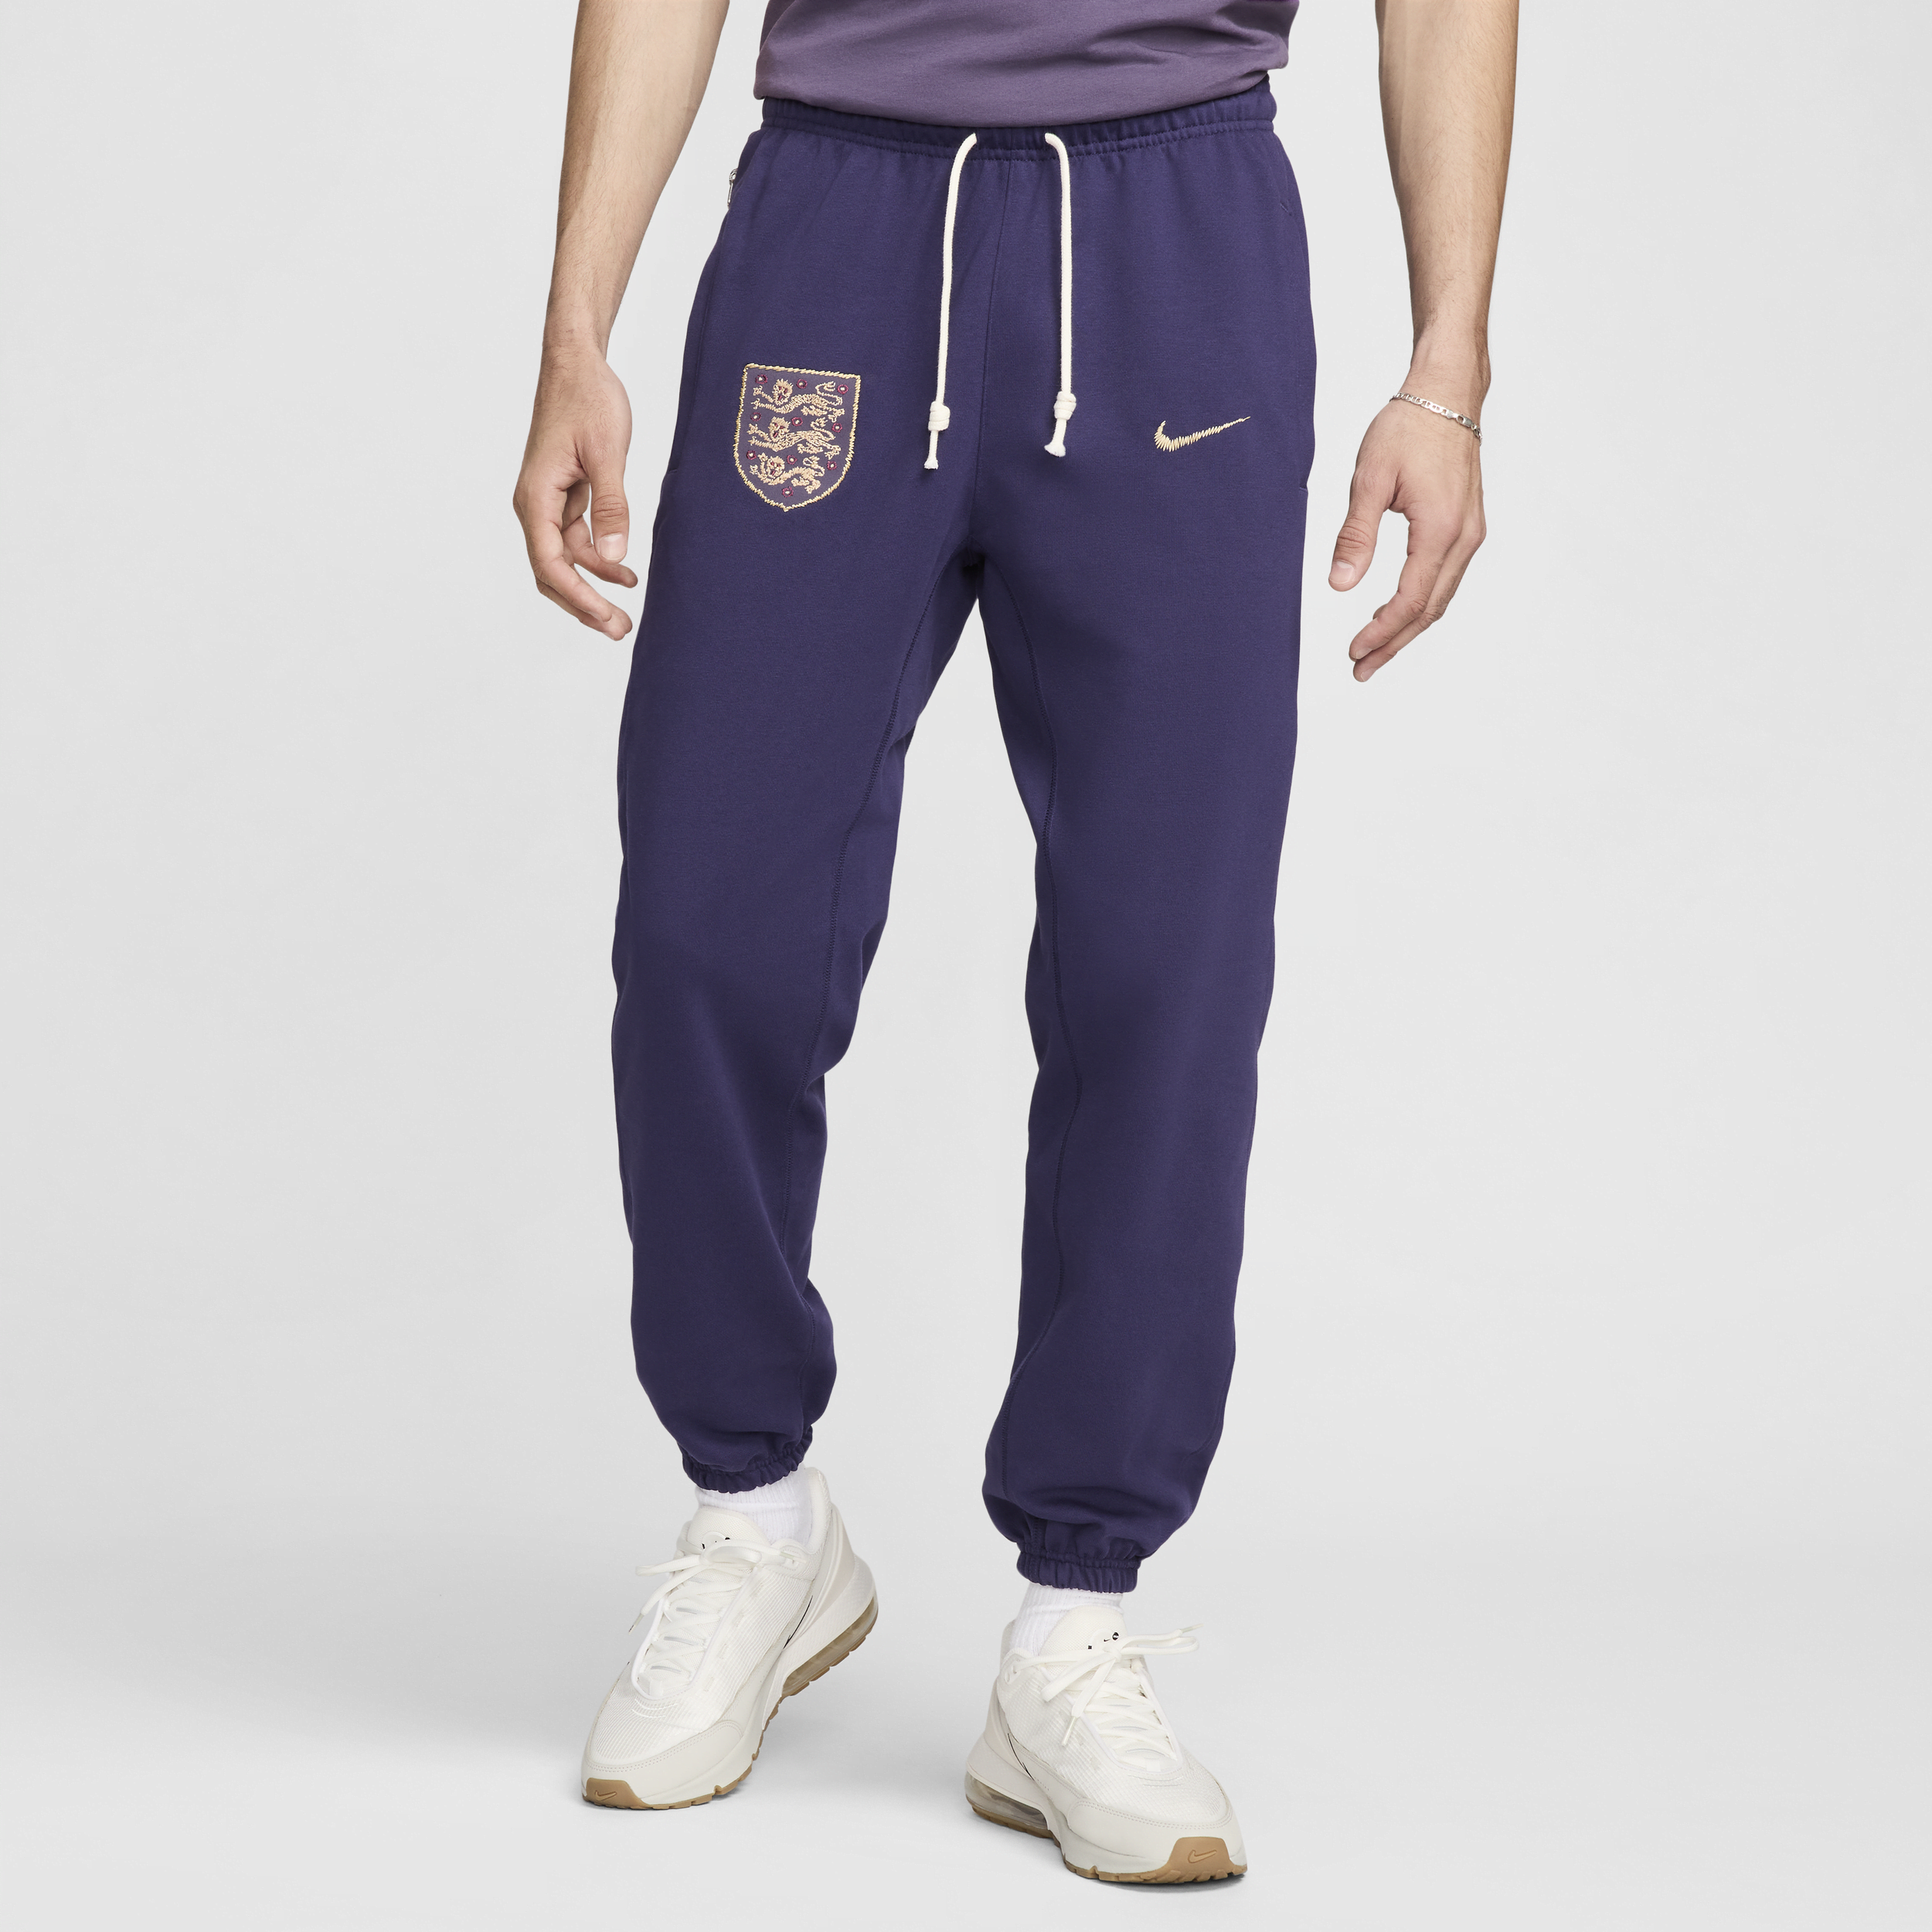 Pantaloni da calcio Nike Inghilterra Standard Issue – Uomo - Viola